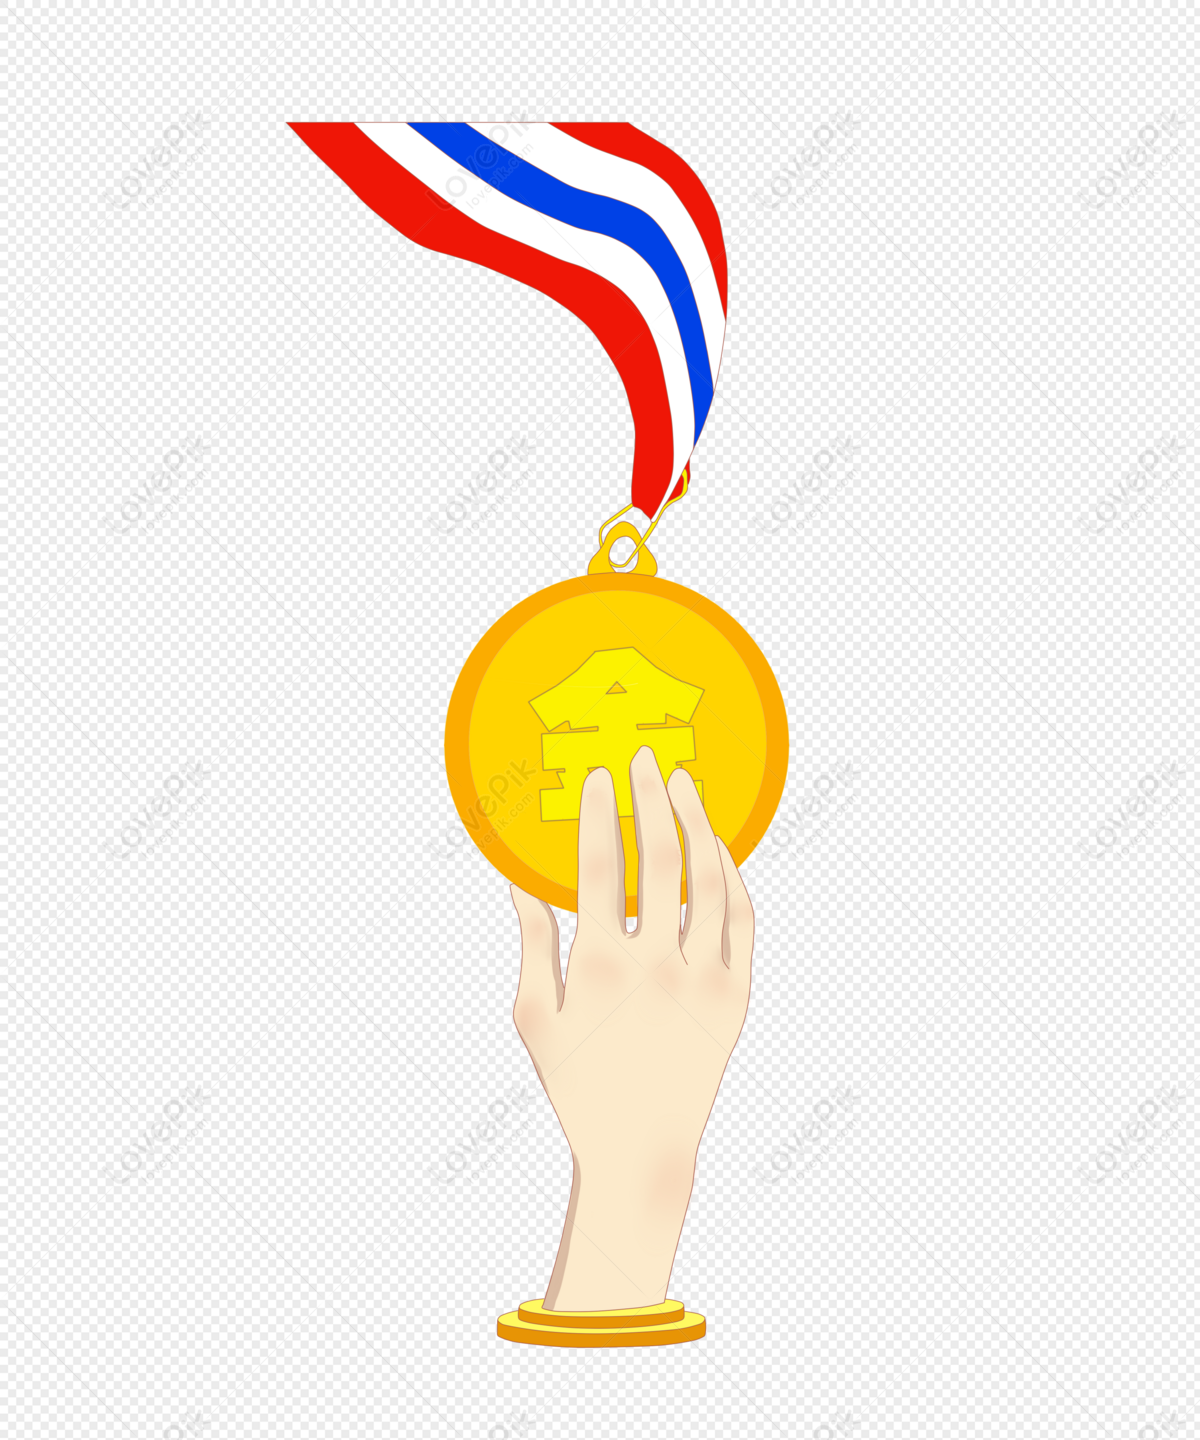 golden medal clipart free